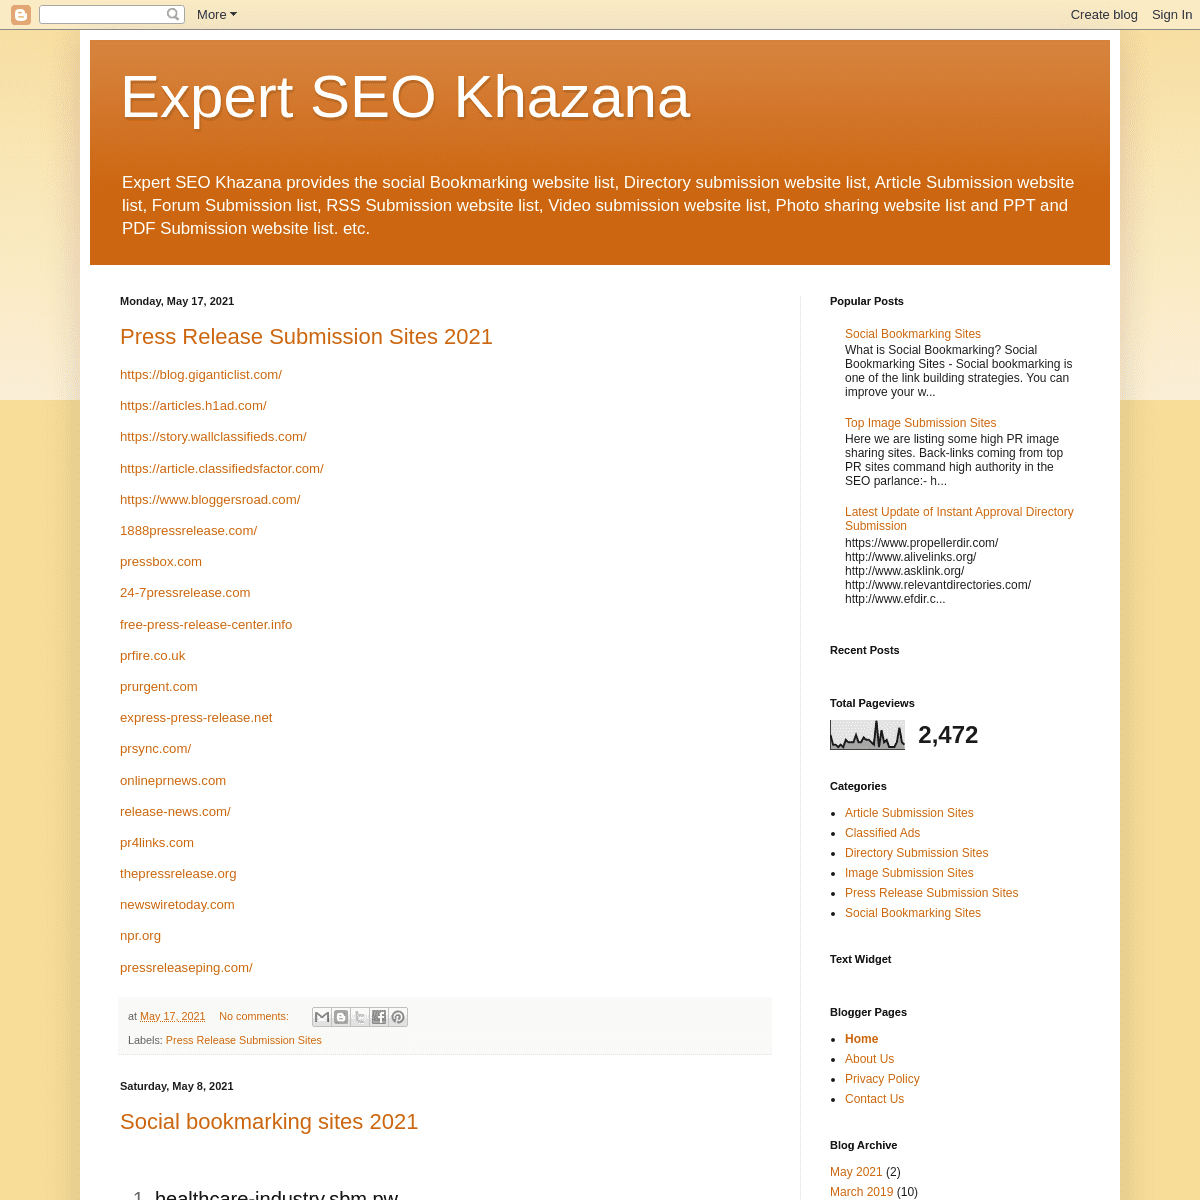 A complete backup of https://expertseokhazana.blogspot.com/